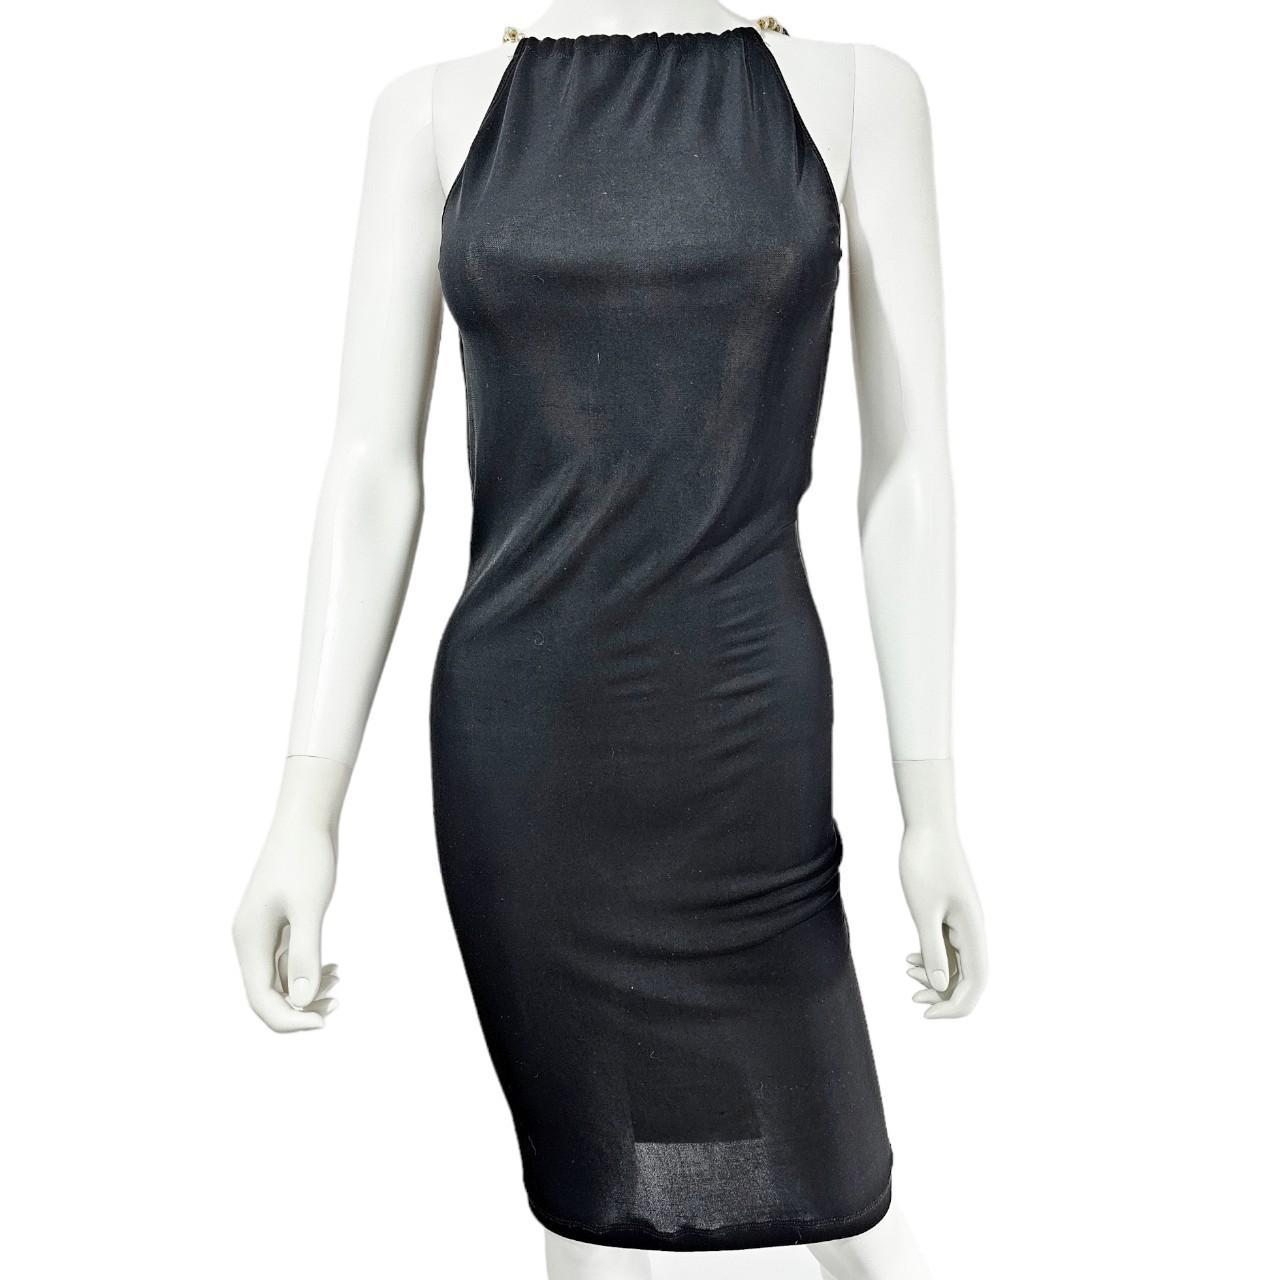 Dolce & Gabbana Women's Black and Silver Dress - 1